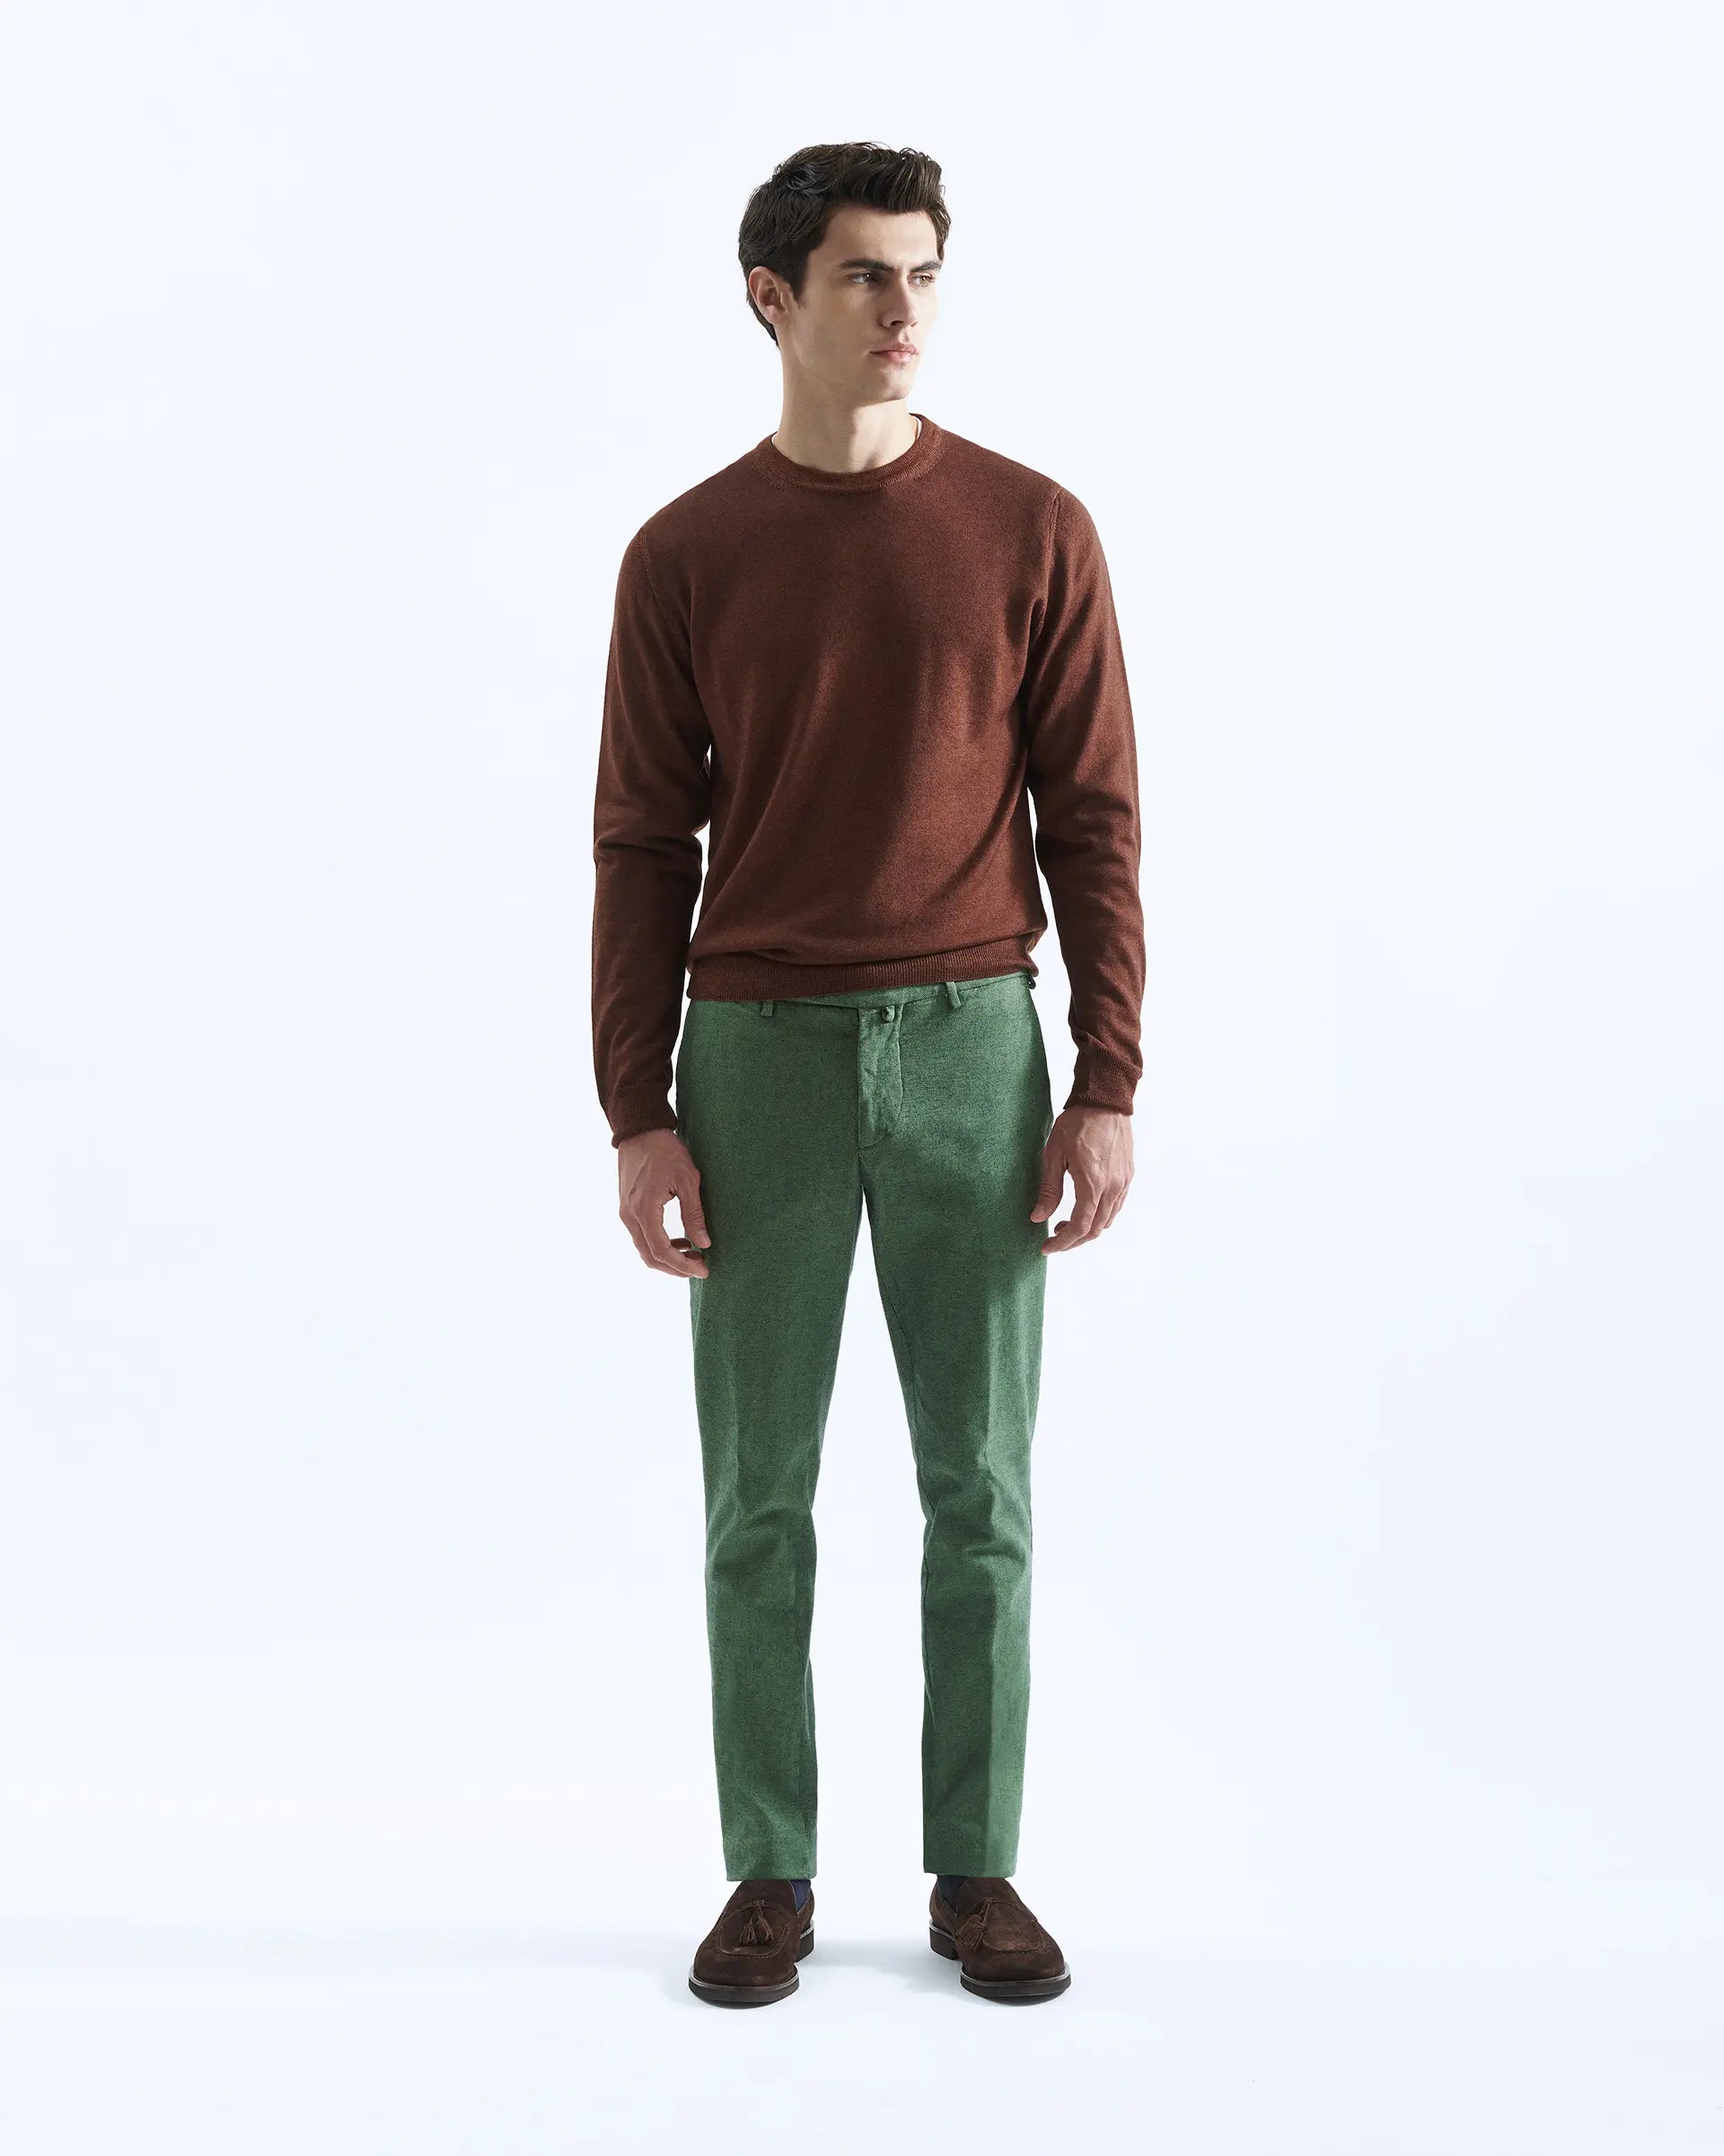 Pantalone verde in cotone canvas stretch